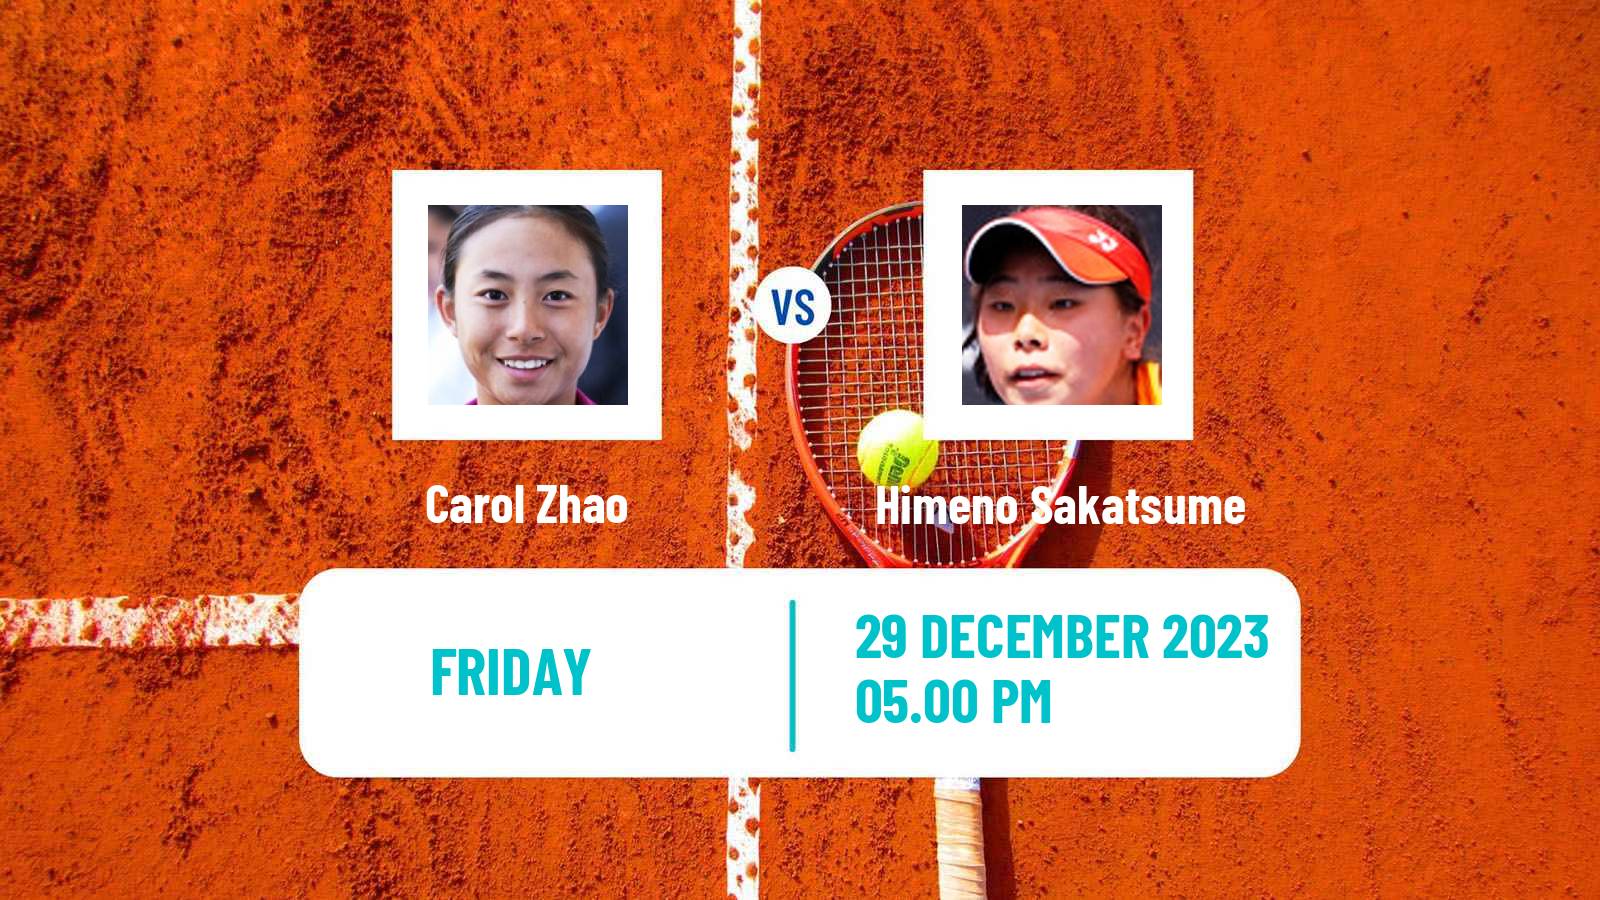 Tennis WTA Auckland Carol Zhao - Himeno Sakatsume